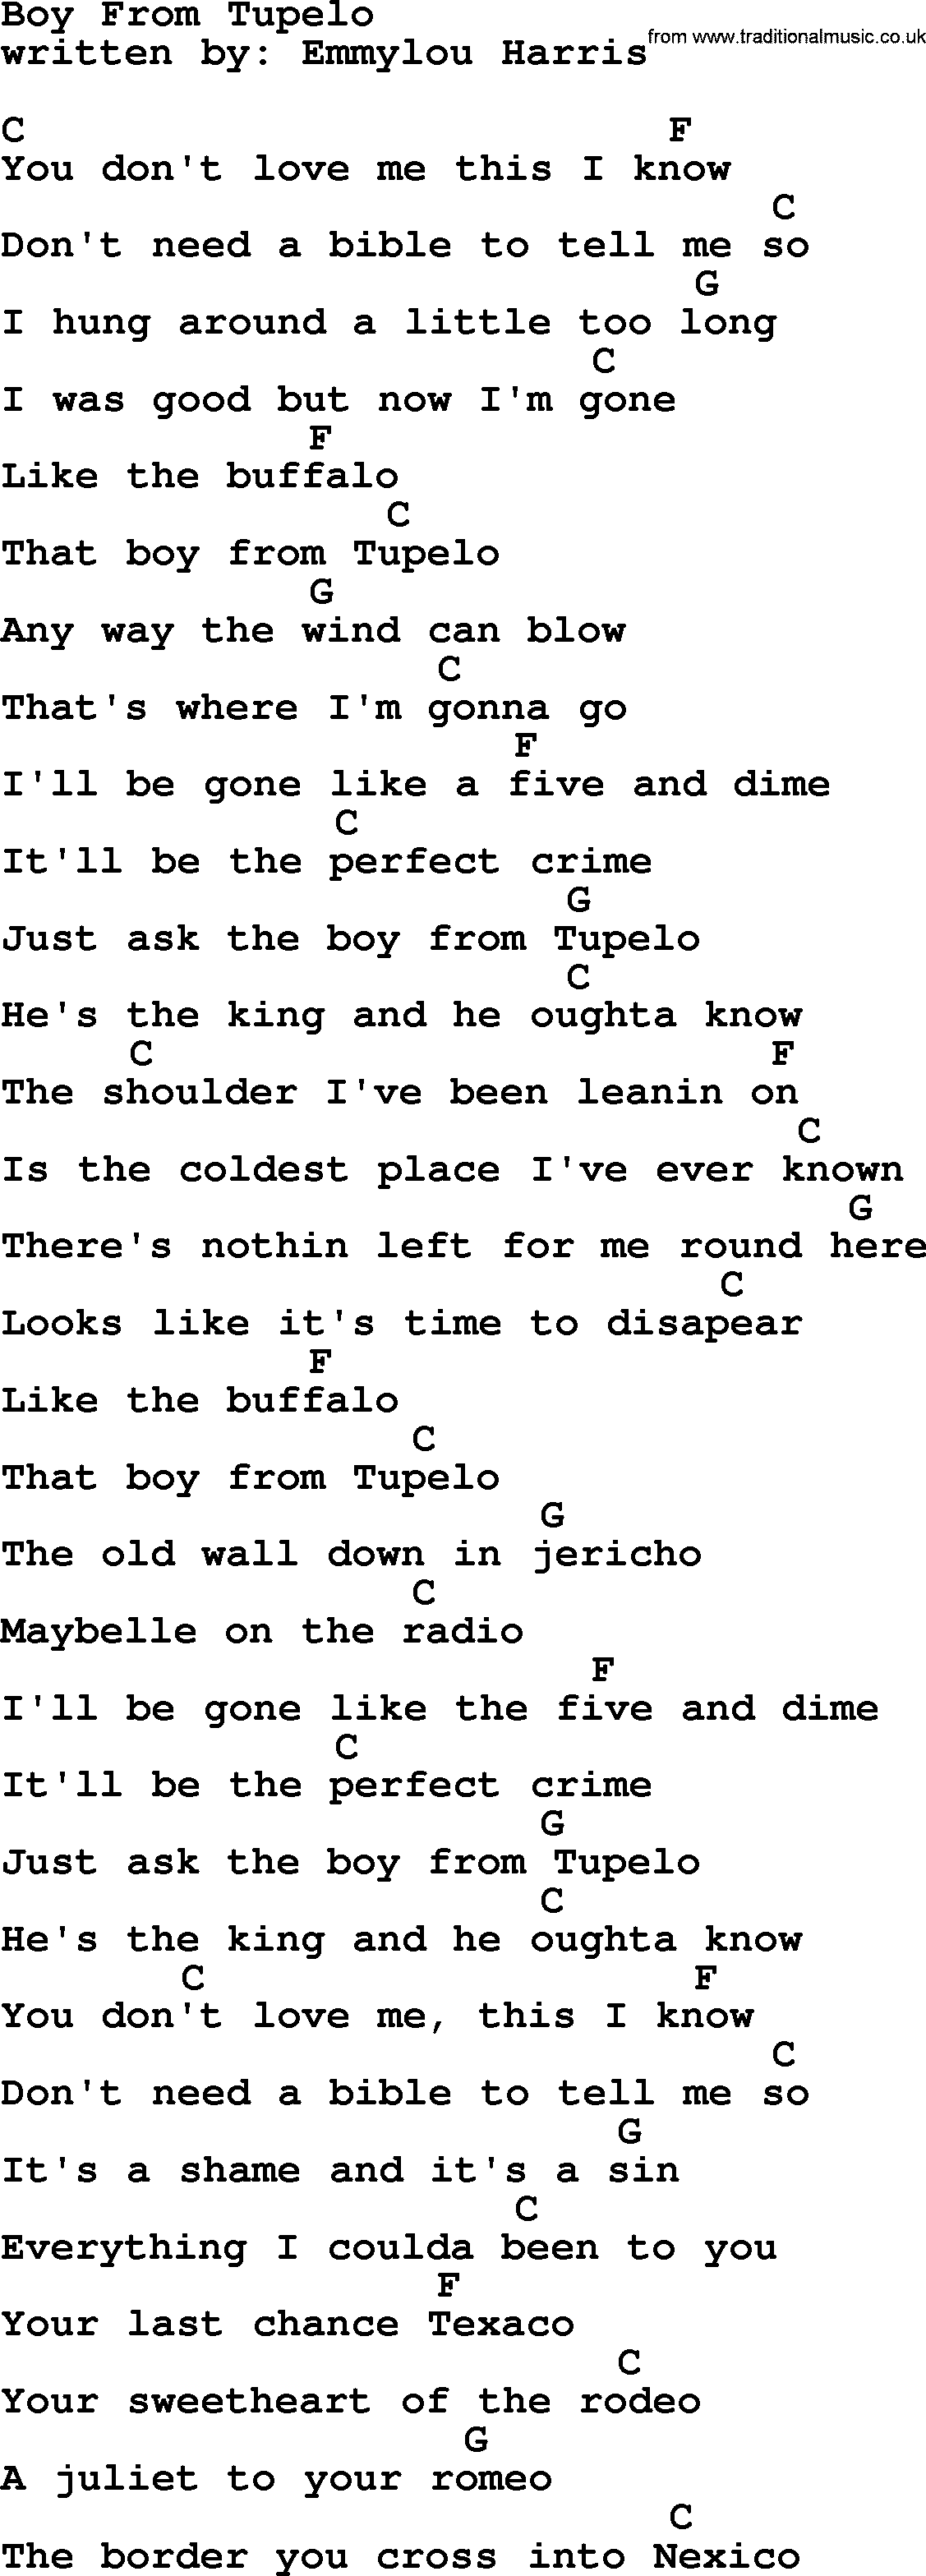 Emmylou Harris song: Boy From Tupelo lyrics and chords